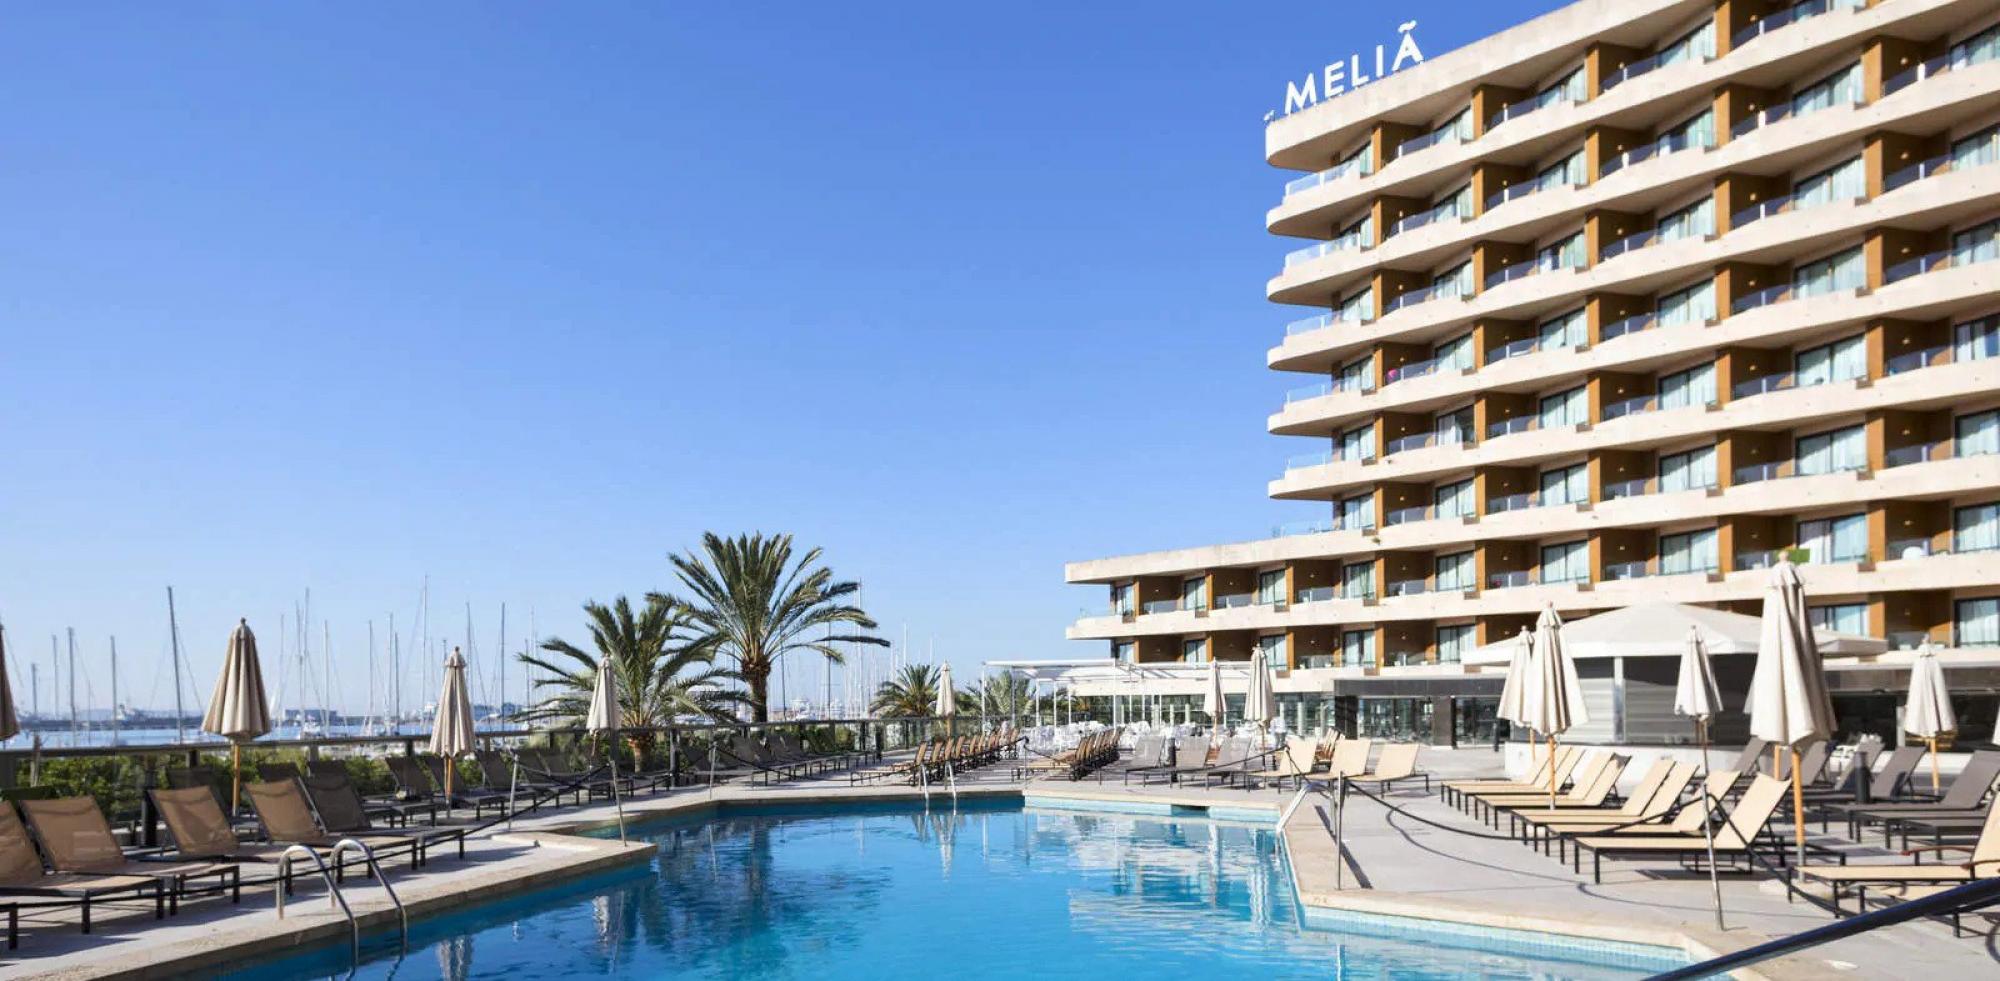 The Melia Palma Marina's impressive sea view pool situated in gorgeous Mallorca.